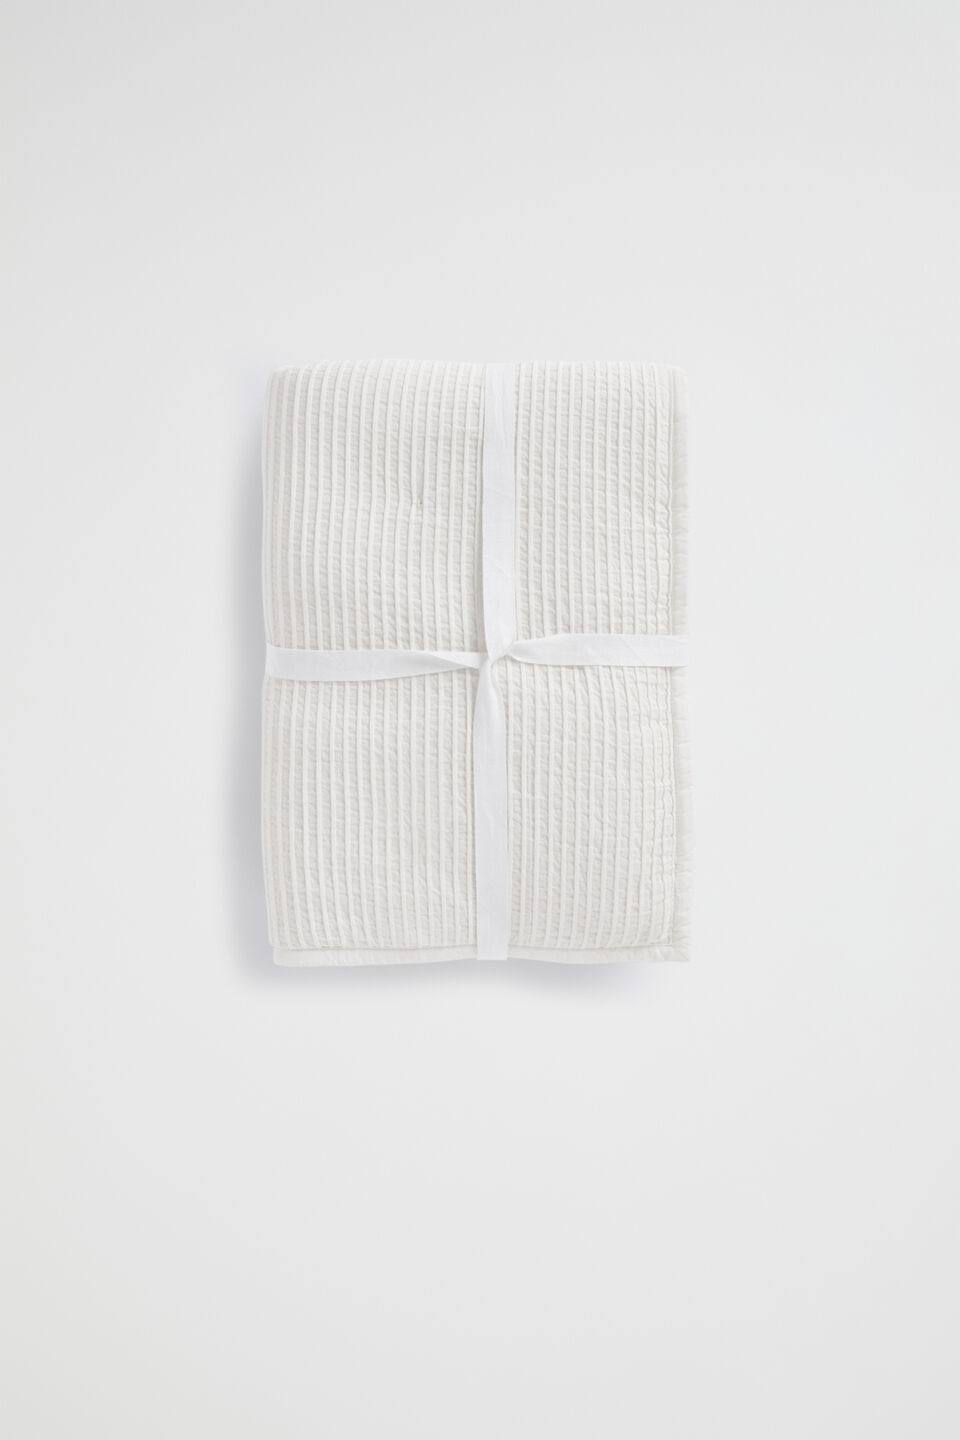 Nia Pleat Standard Pillowcase Set of 2  Cloud Cream